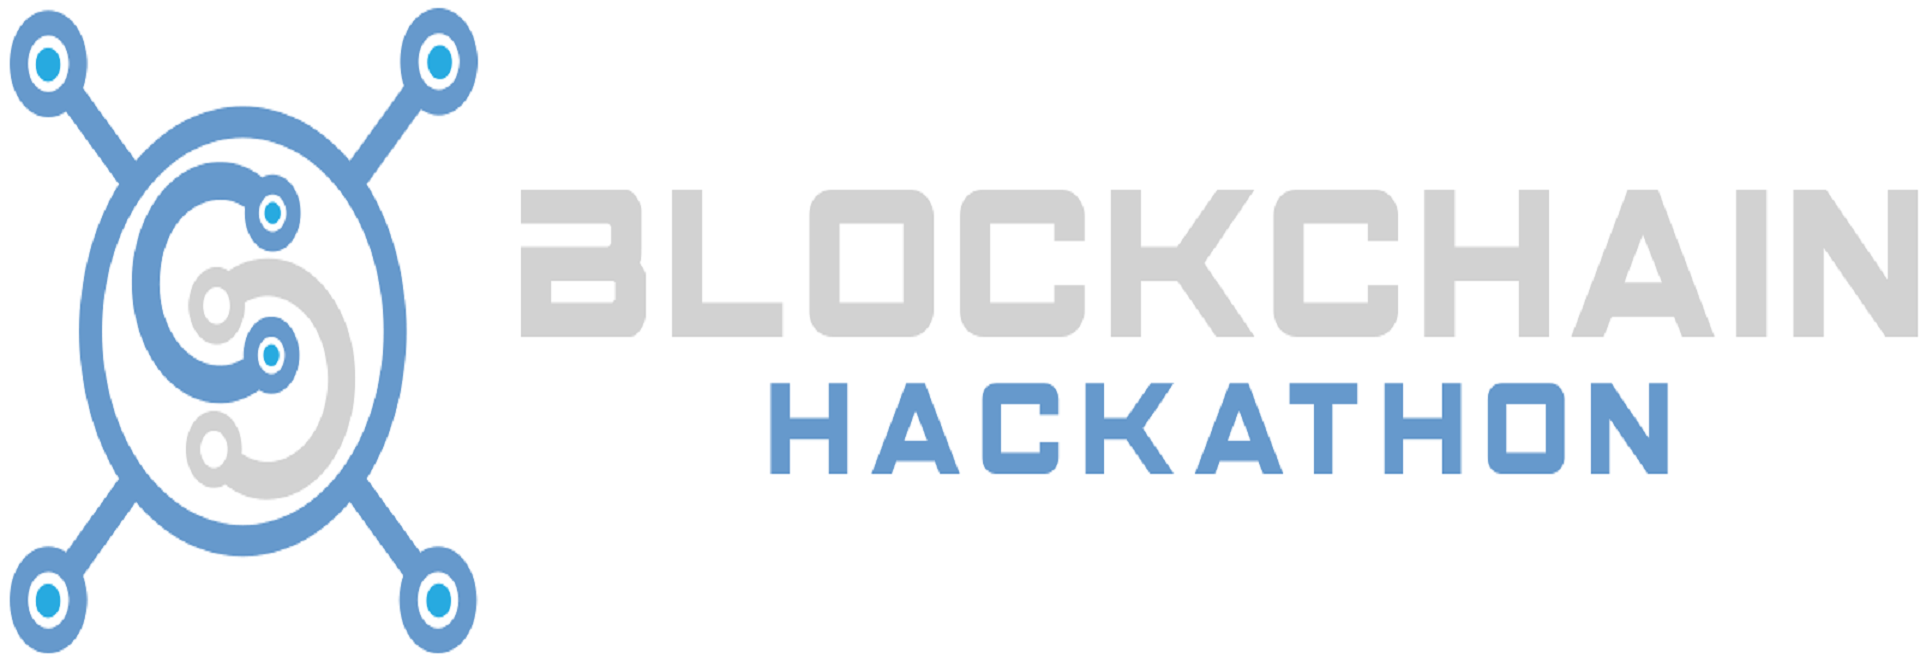 blockchain hackathon 1 - اخبار پنجشنبه مورخ 97/12/9